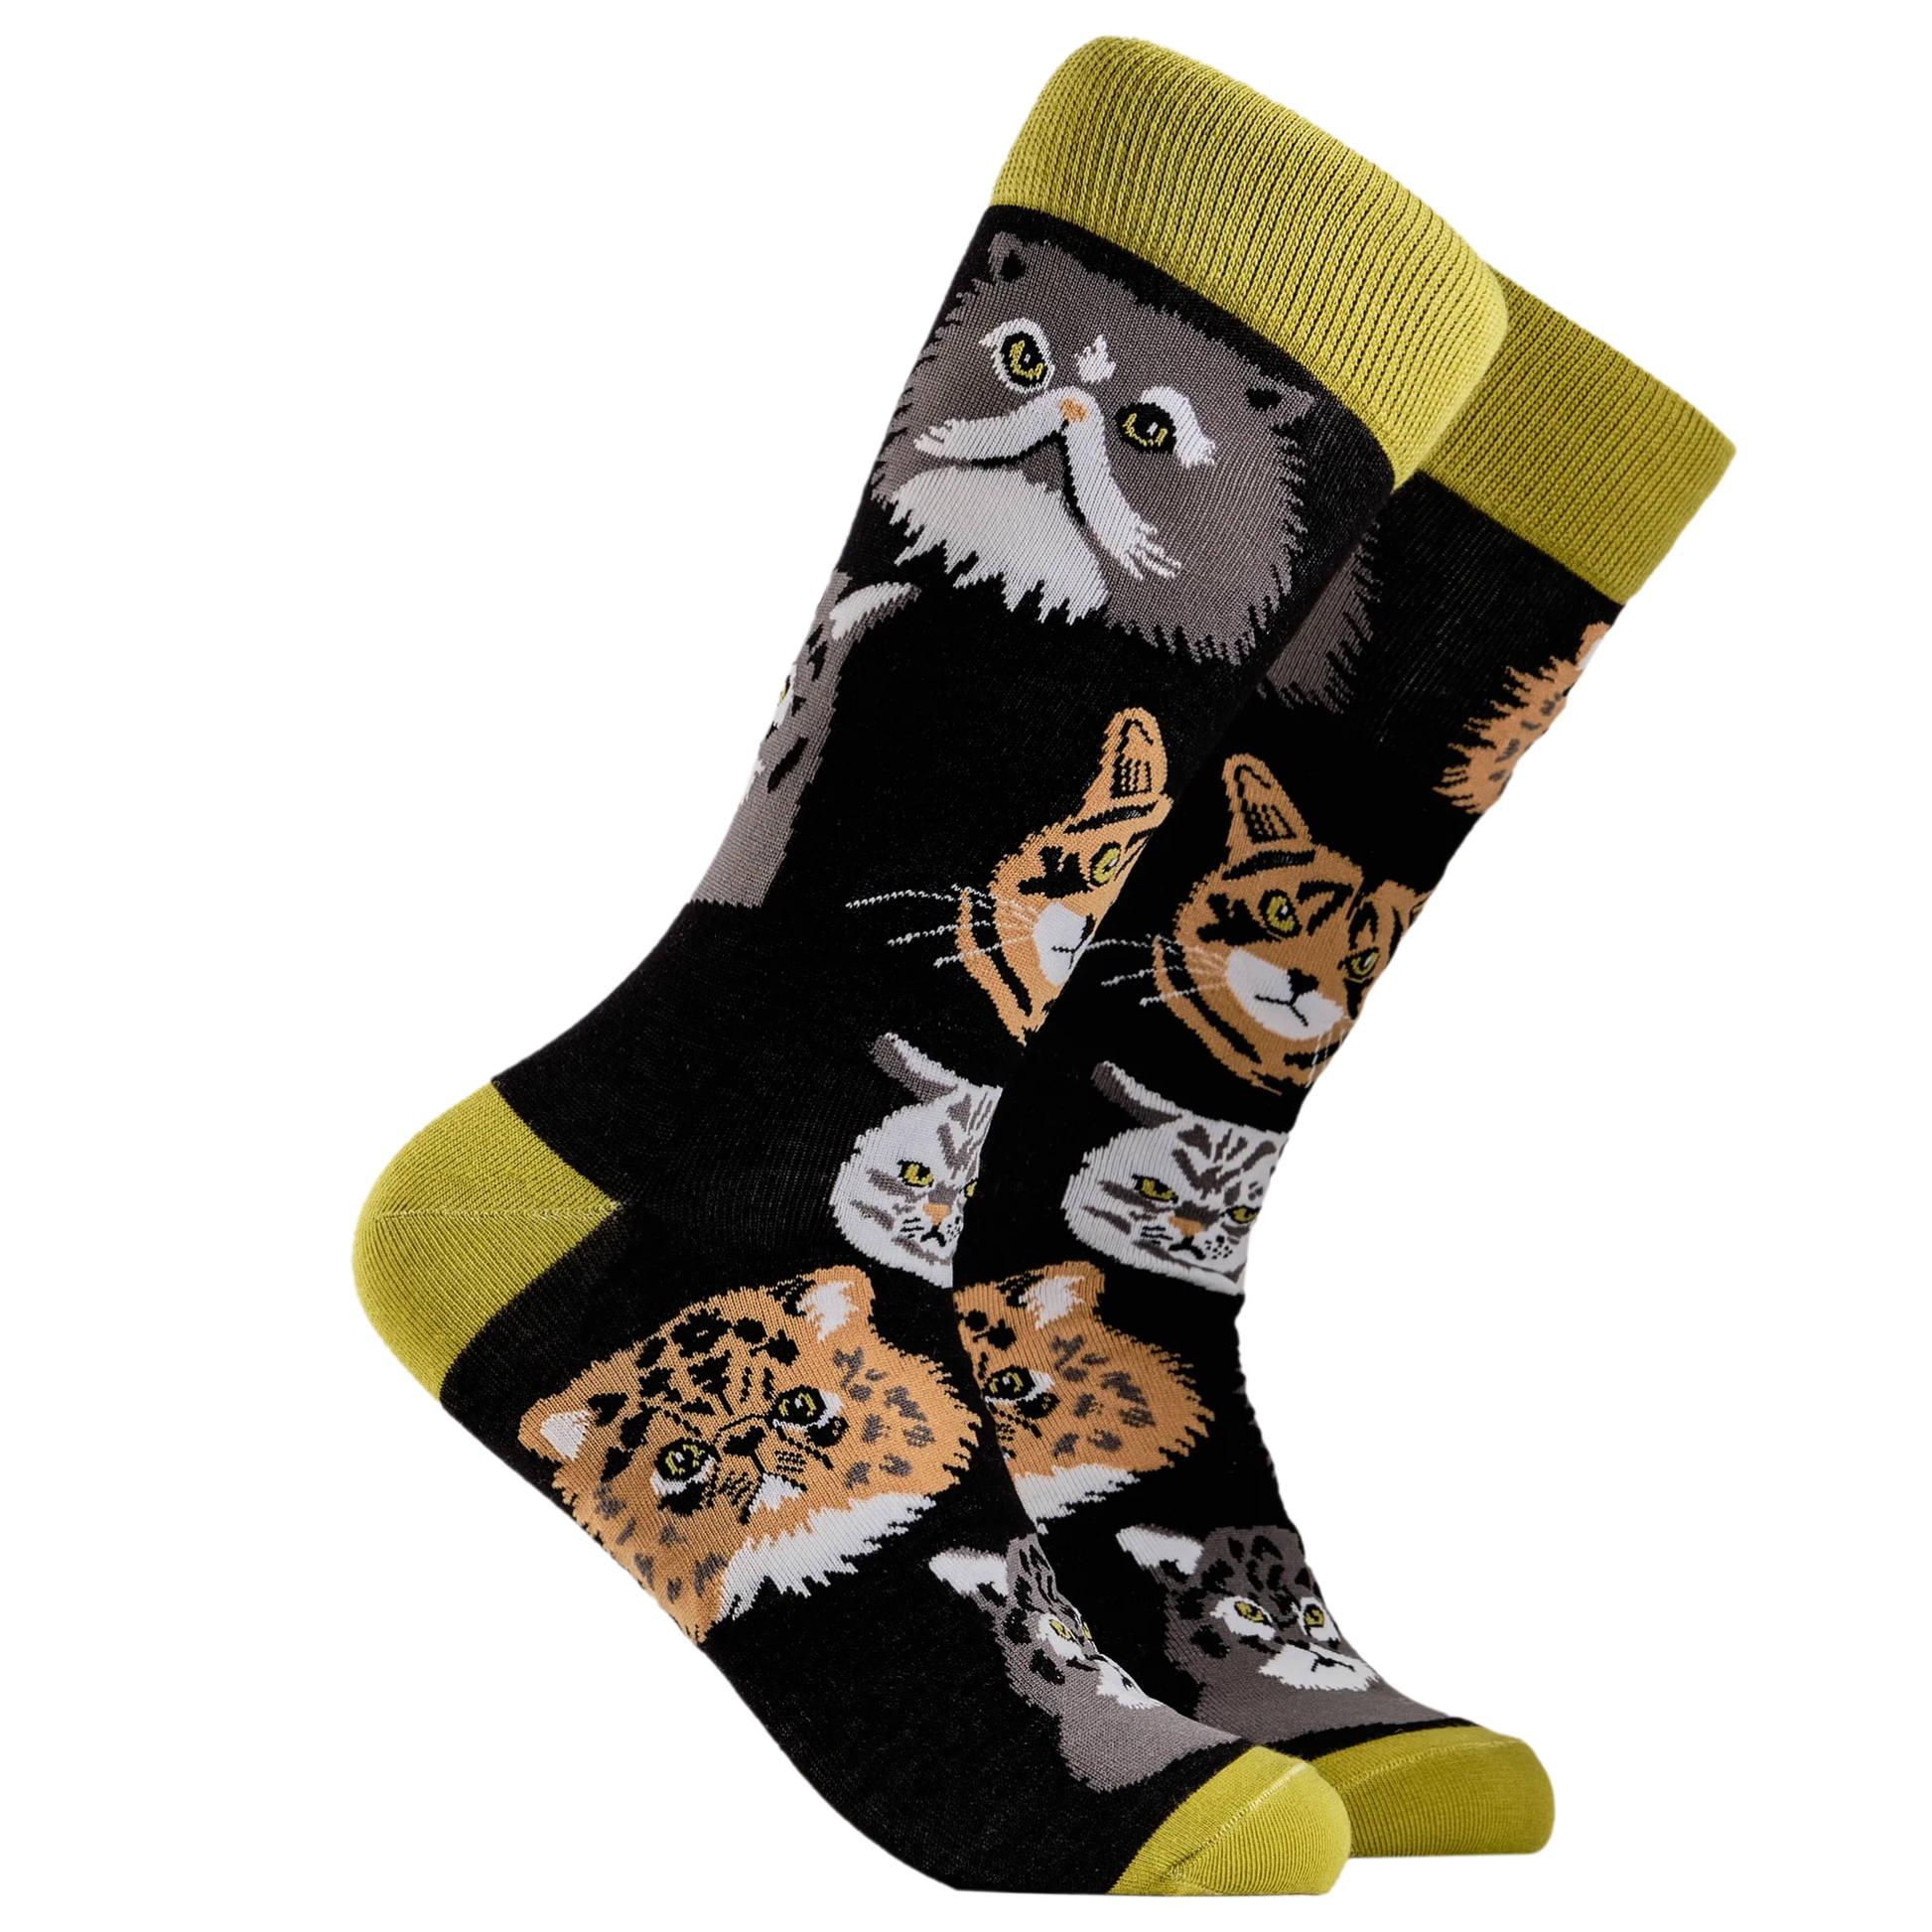 A pair of socks depicting various grumpy cats. Black legs, green cuff, heel and toe.